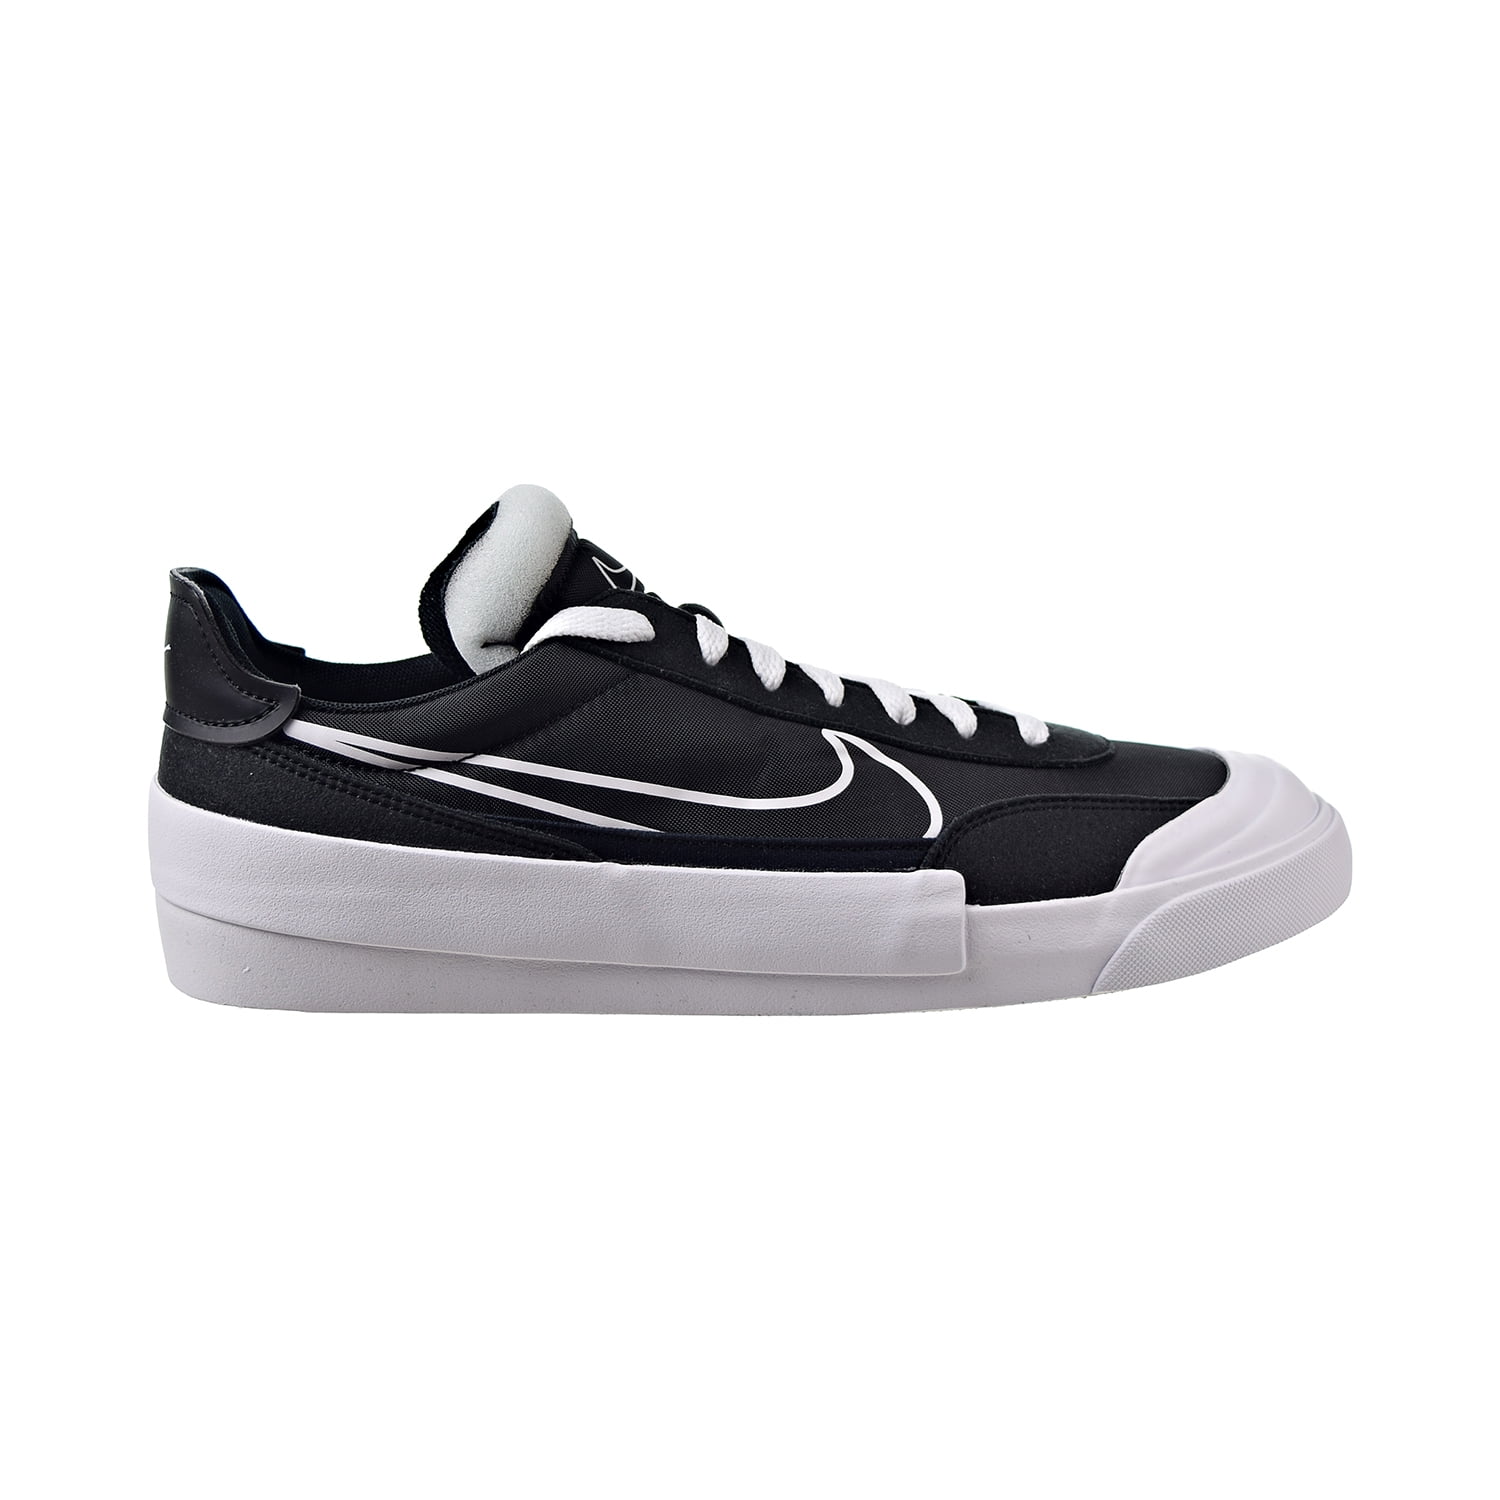 vaak passie Uitstekend Nike Drop-Type Hybrid Men's Shoes Black-White cq0989-002 - Walmart.com